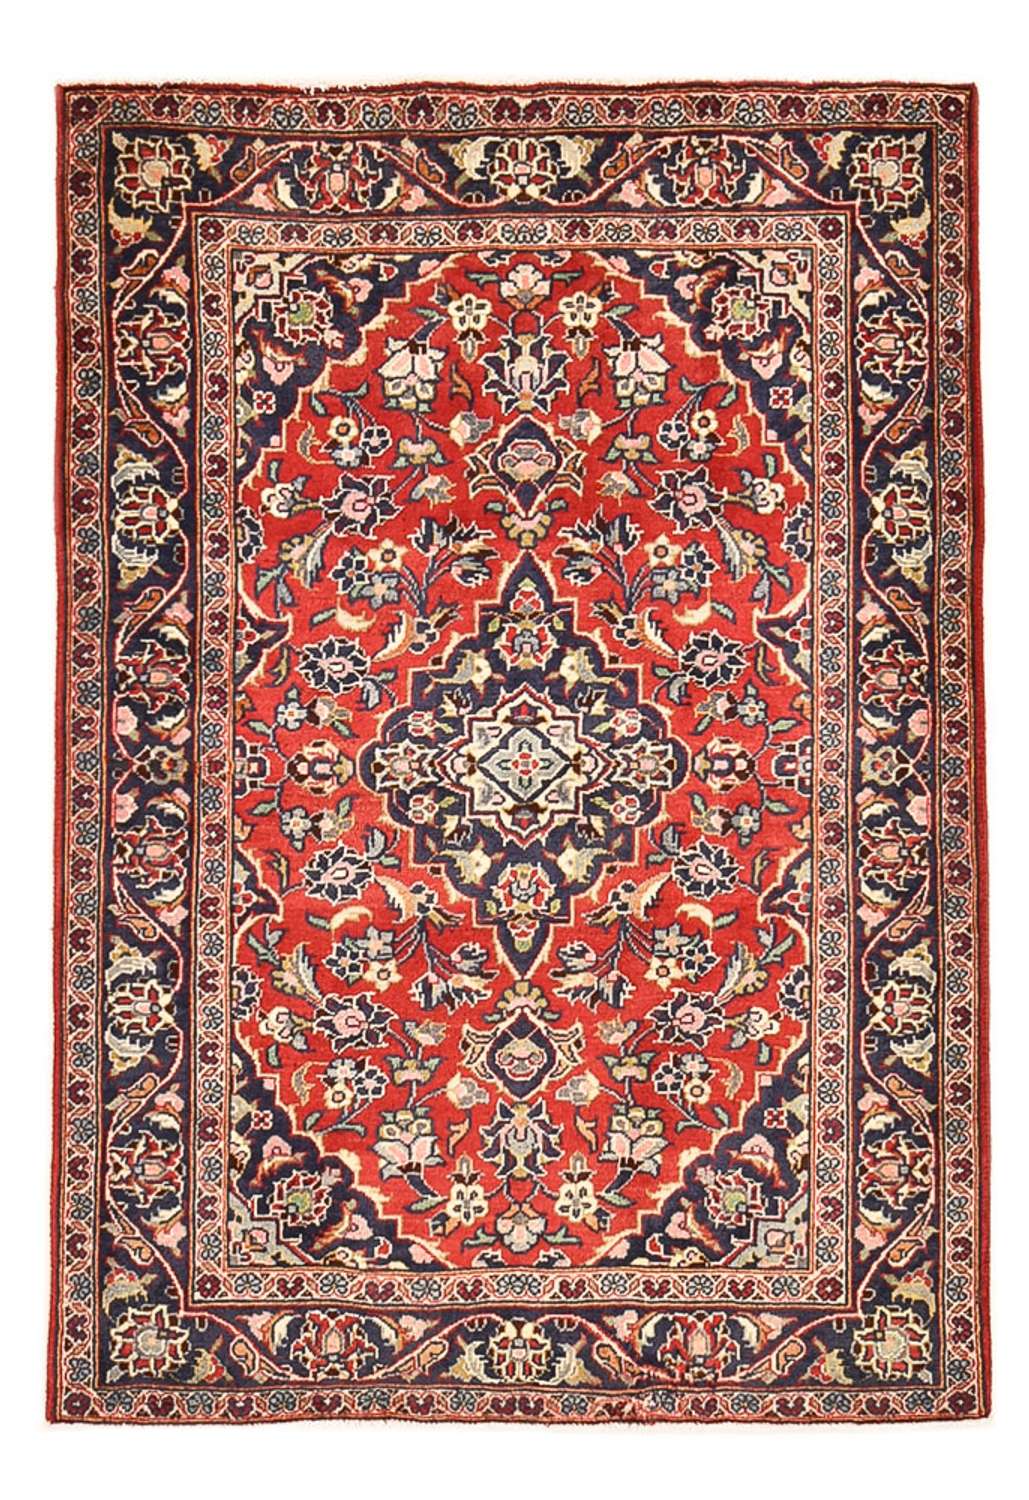 Tapis persan - Keshan - 150 x 97 cm - rouge